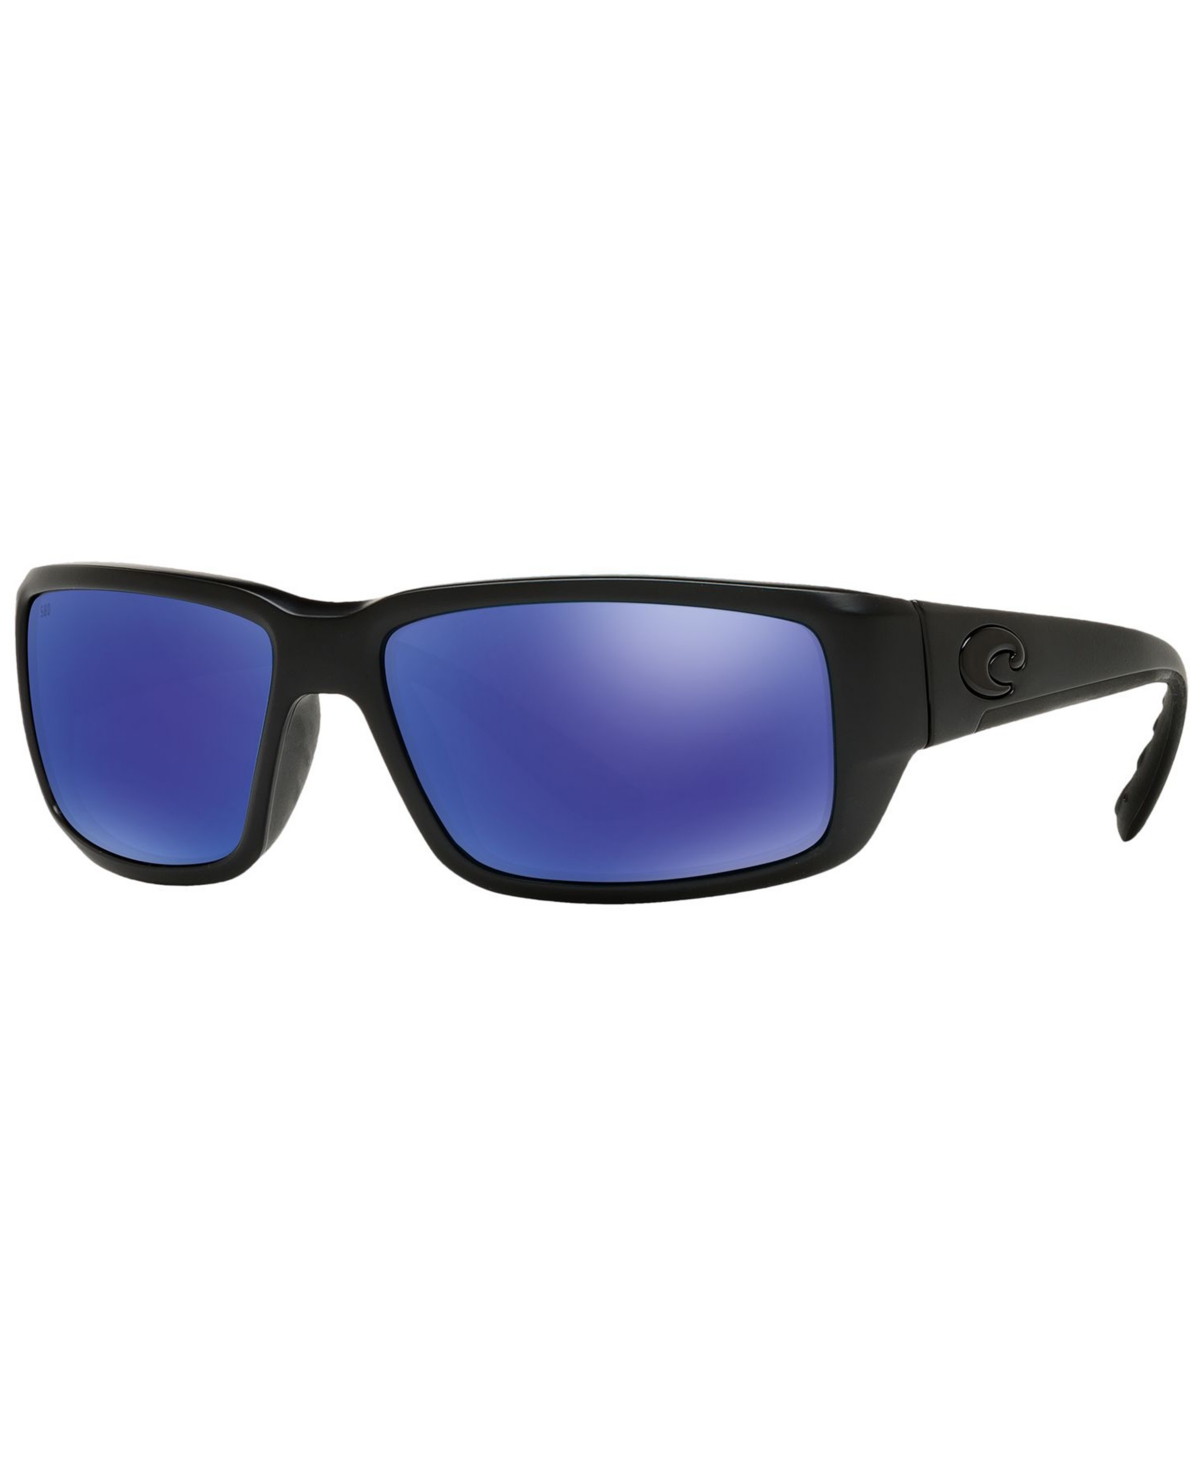 Men's Polarized Sunglasses, Fantail - Black/Mirror Blue Polarized